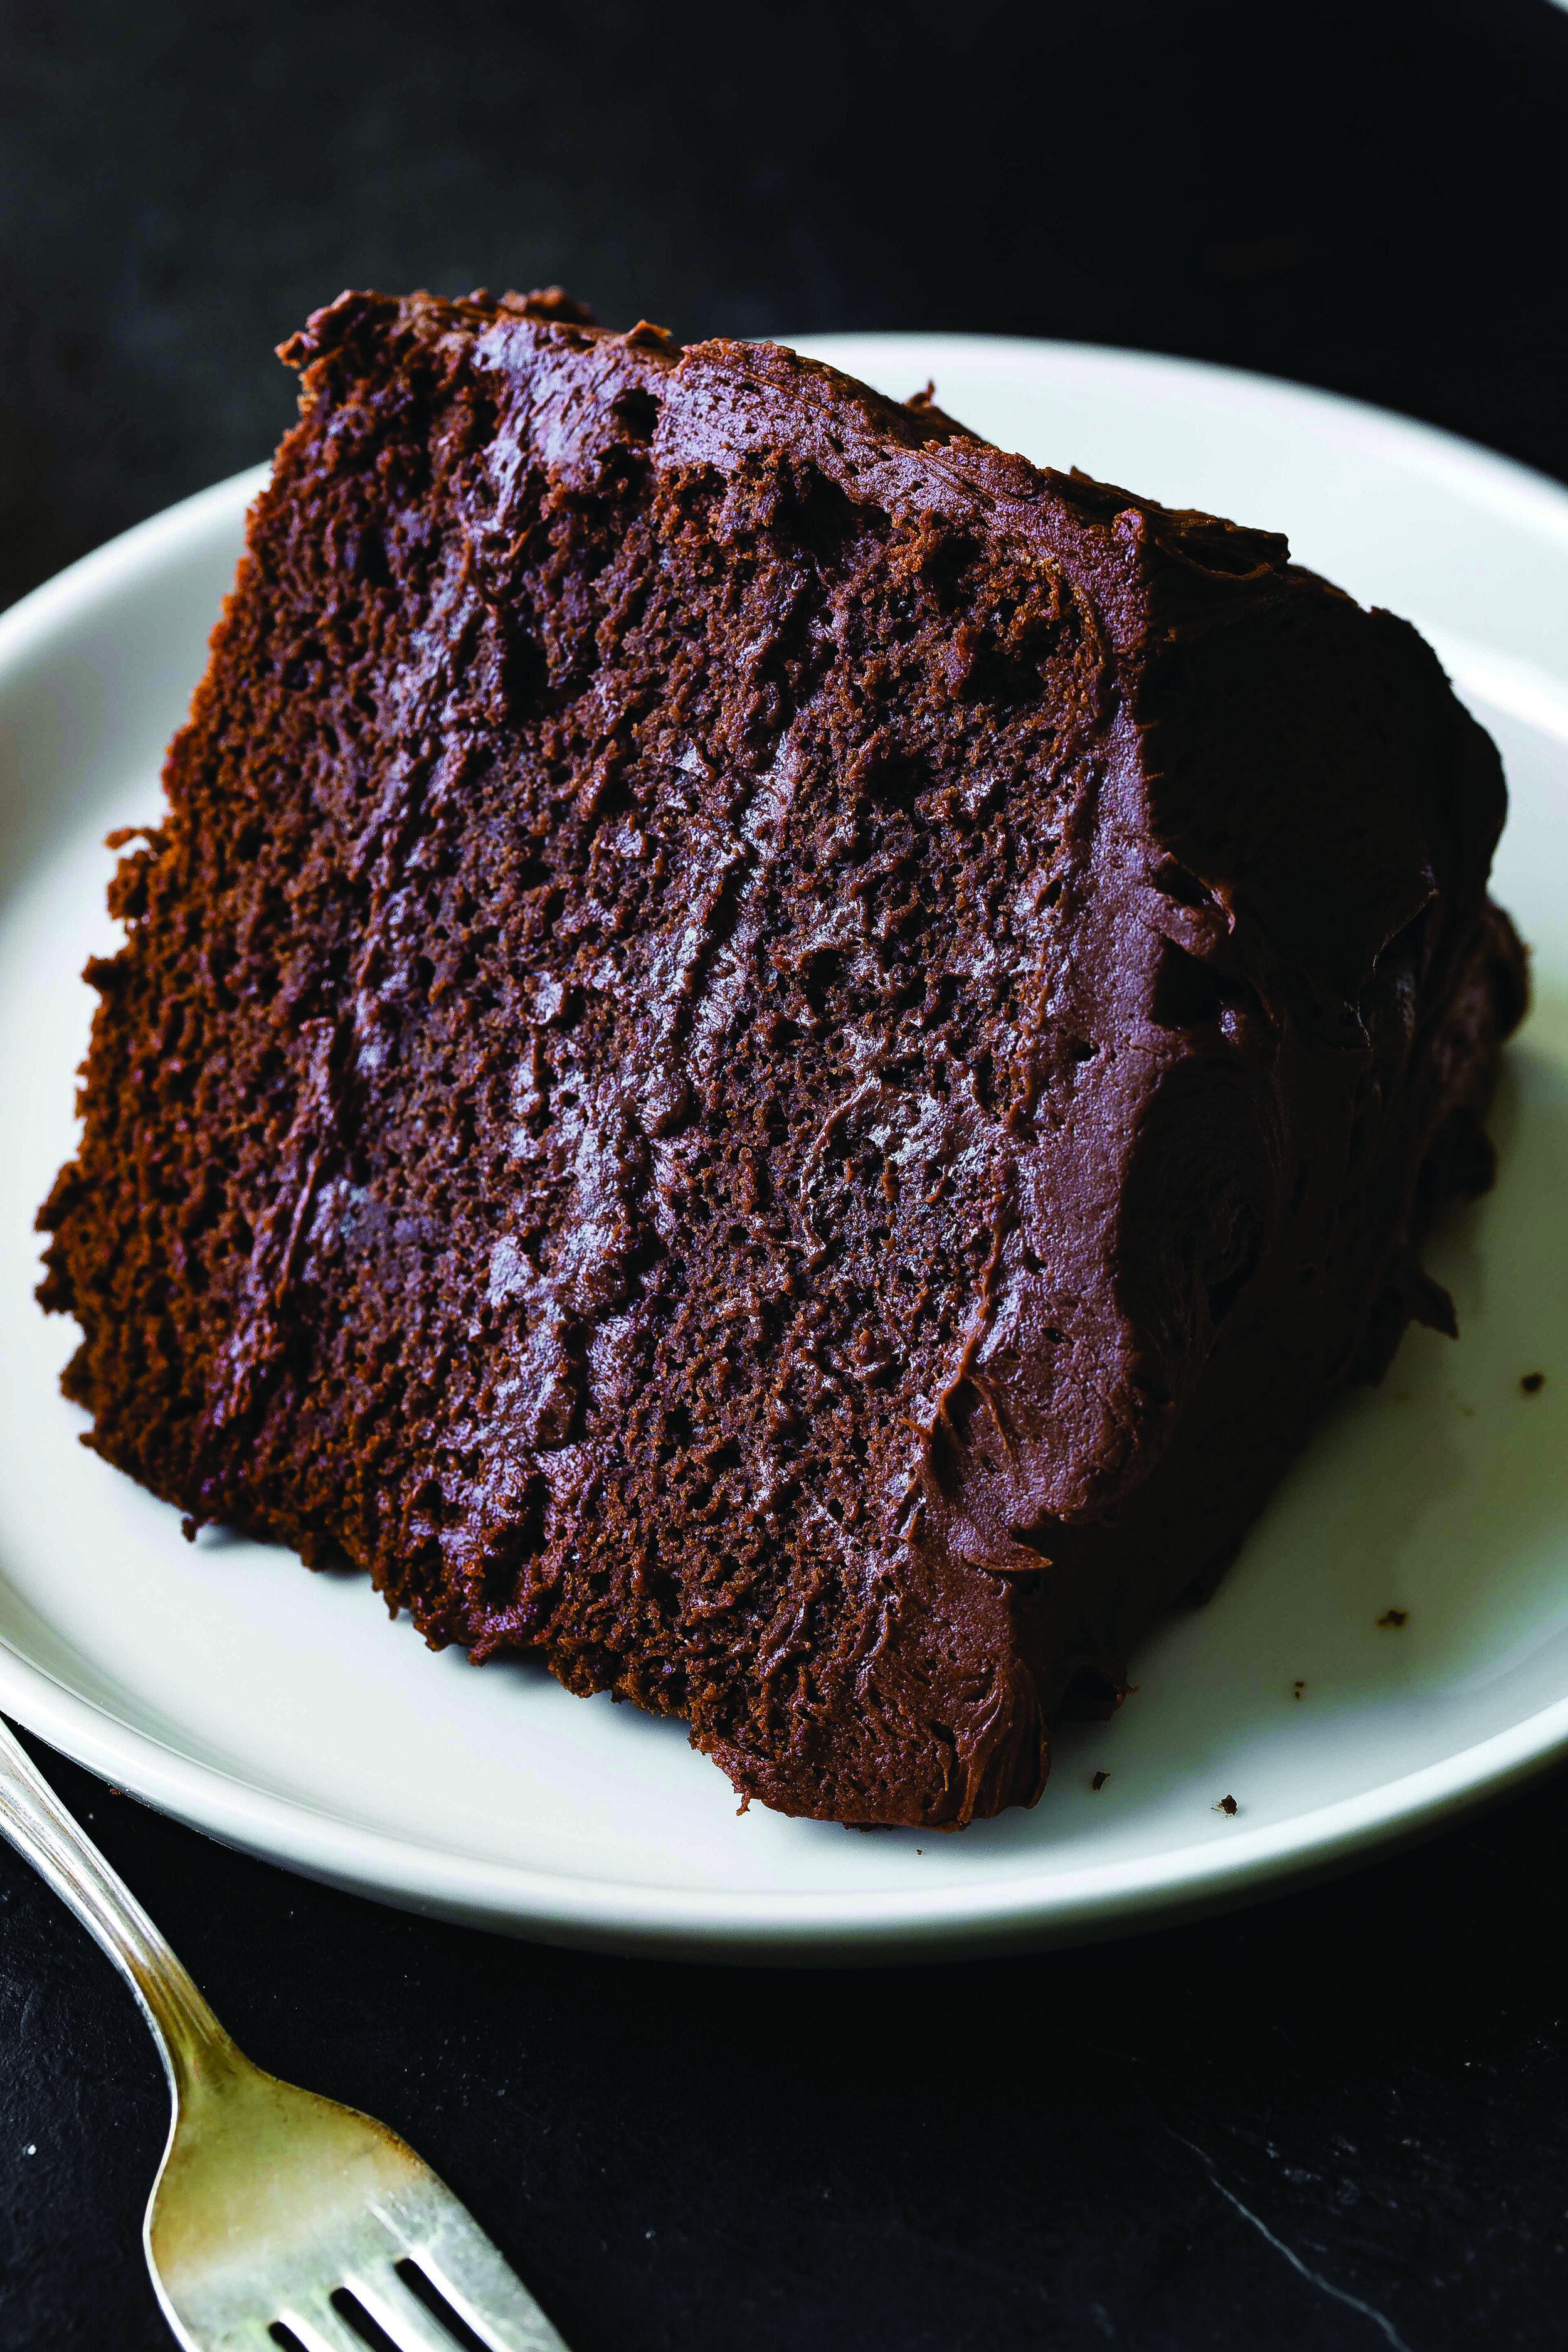 https://images.squarespace-cdn.com/content/v1/5abd66f64eddecafd225c12e/1619746316987-6EGHI92O4EEZ05GWZC8J/chocolate-cake-with-chocolate-frosting-recipe-16.jpg